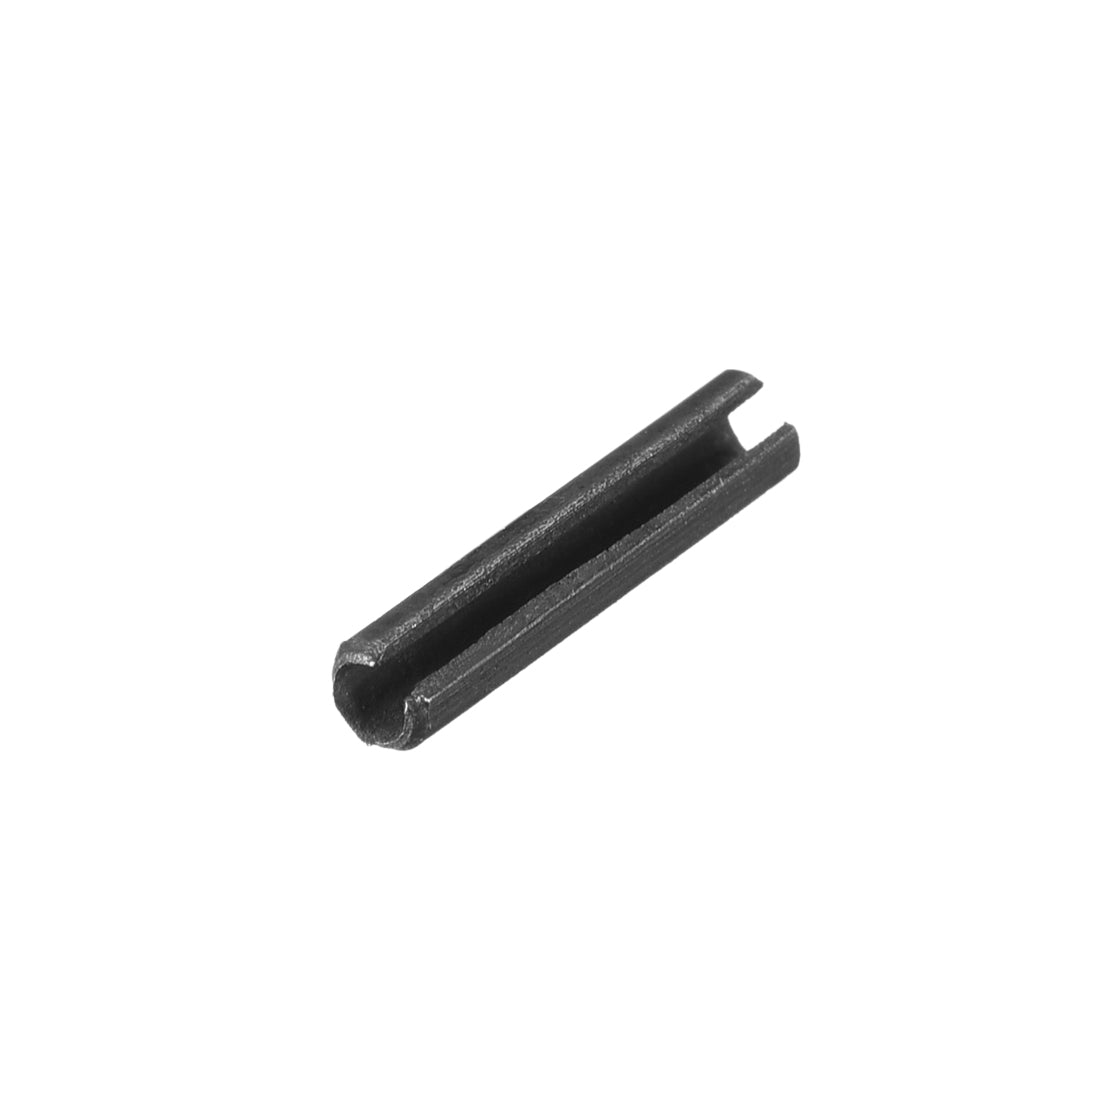 Uxcell Uxcell 1.7mm x 8mm Dowel Pin Carbon Steel Split Spring Roll Shelf Support Pin Fasten Hardware Black 50 Pcs